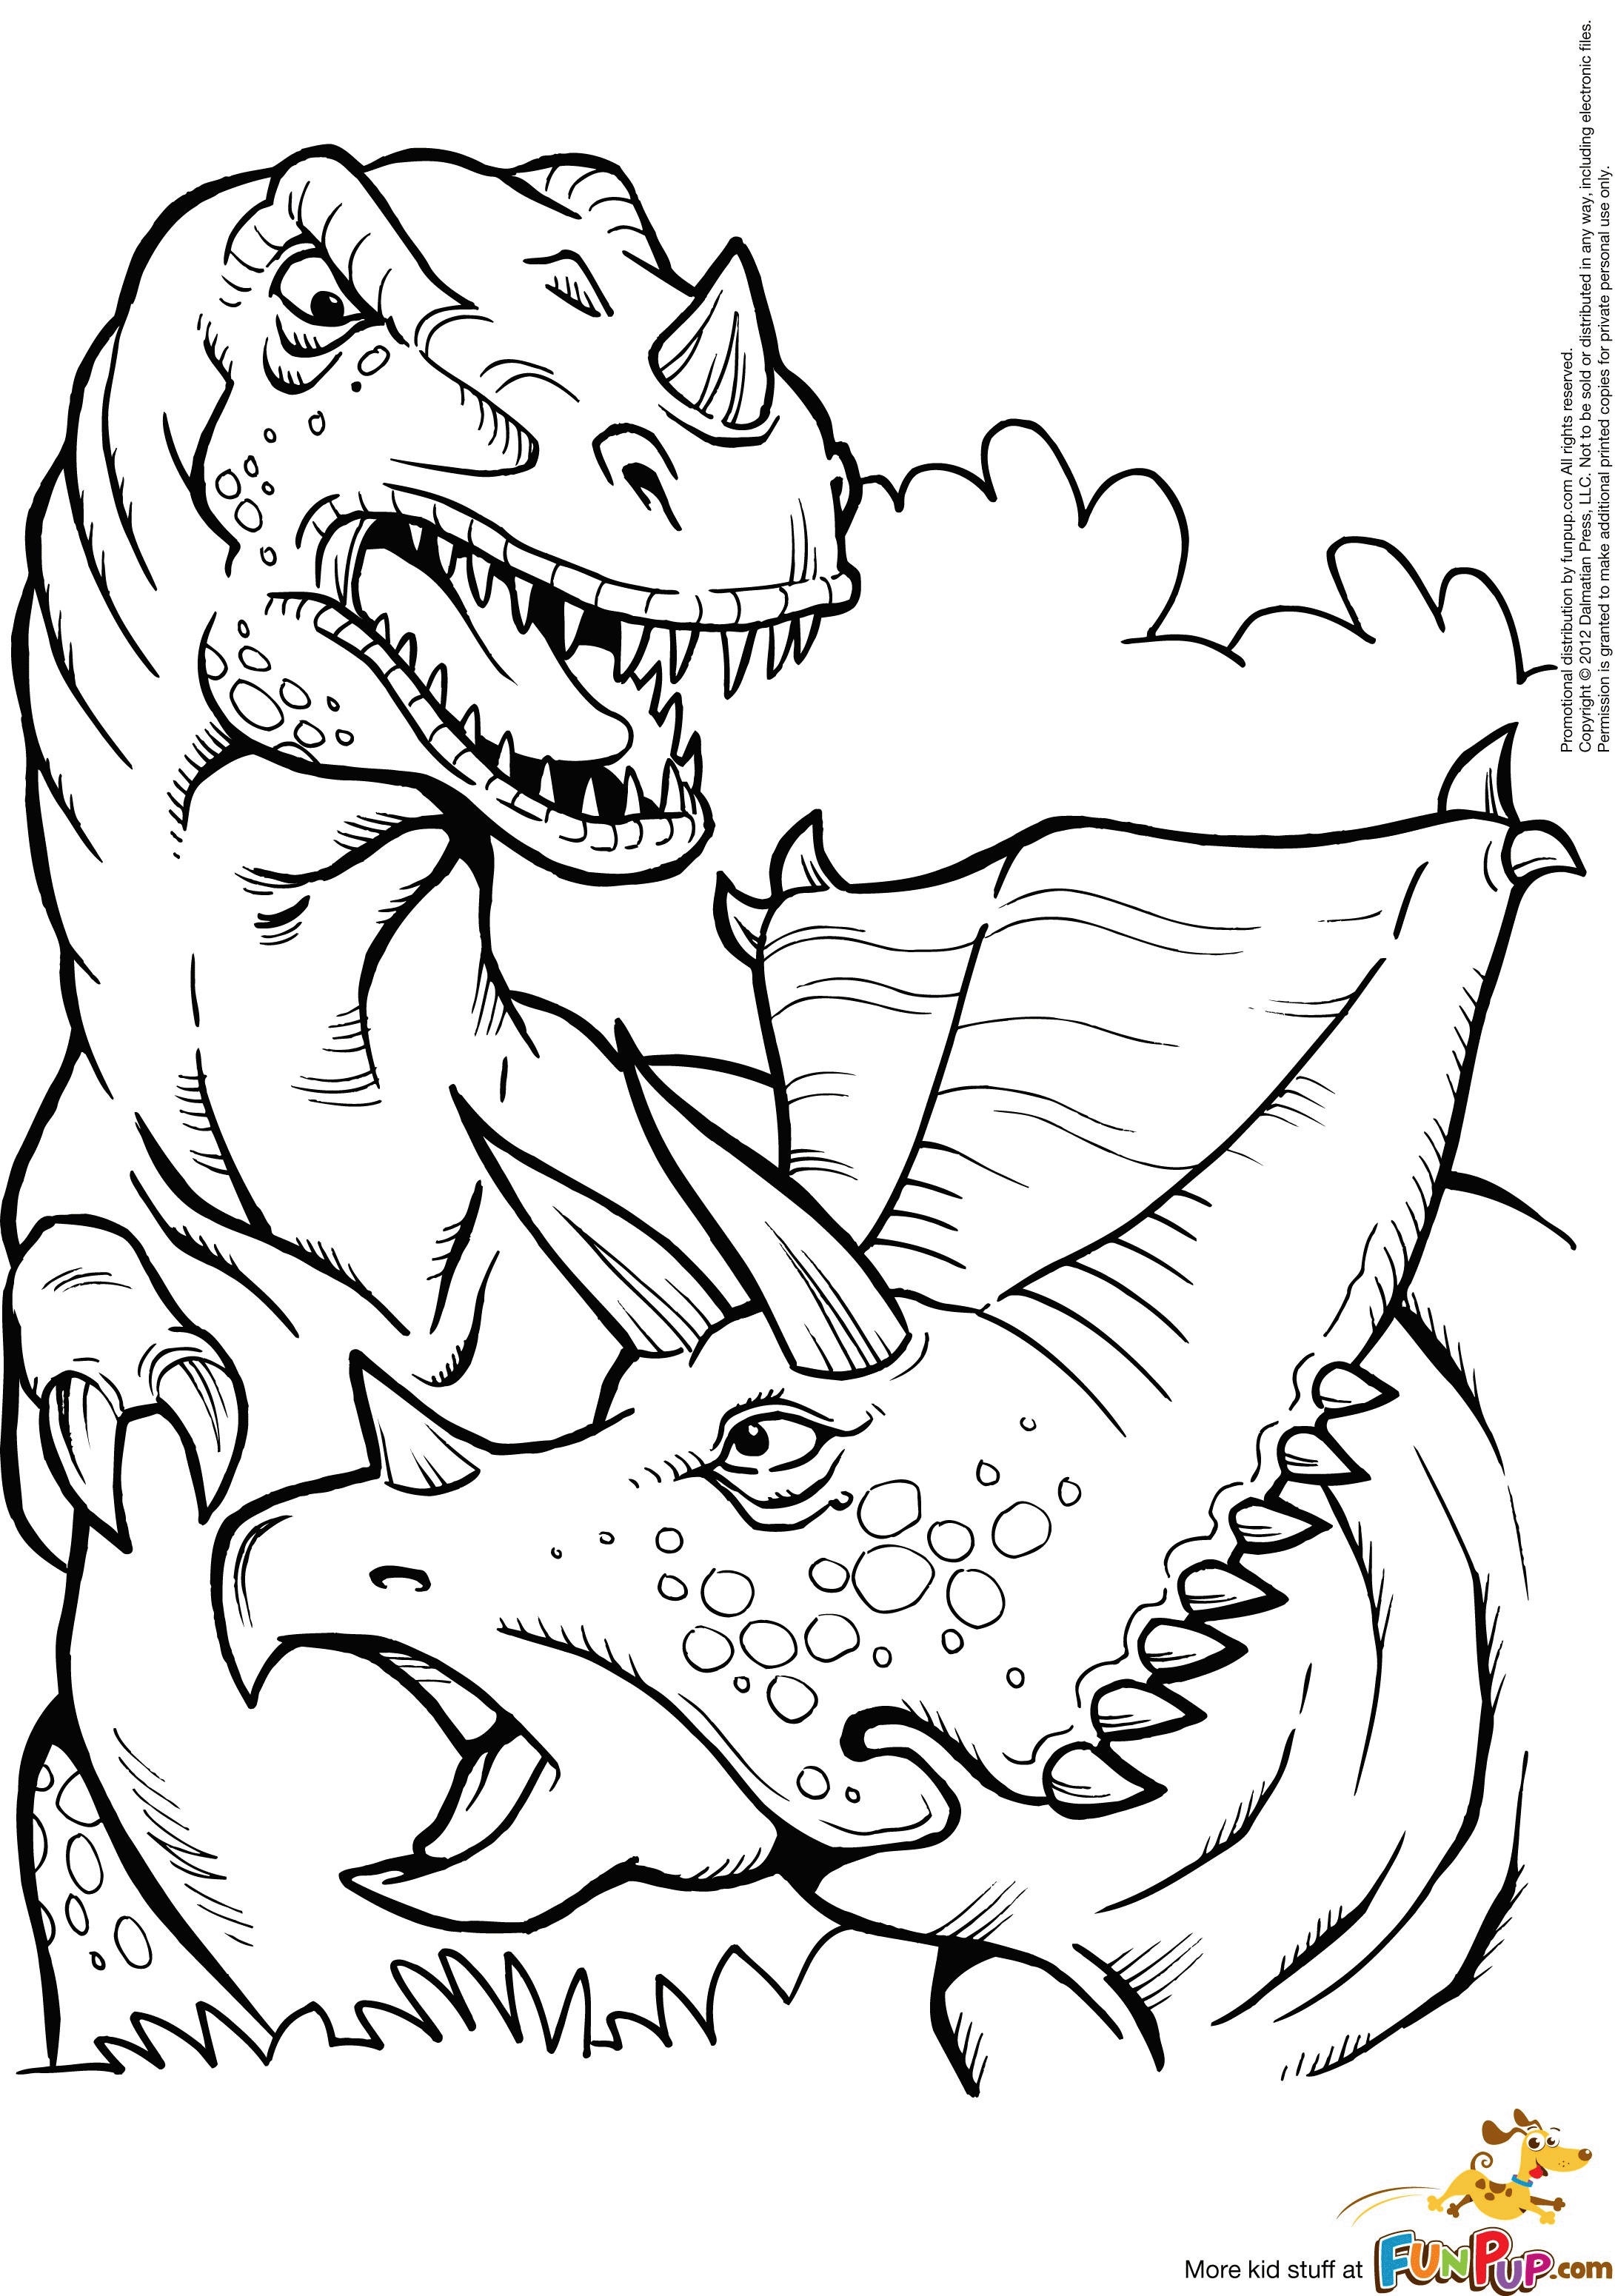 Free Dinosaur T Rex Coloring Pages, Download Free Dinosaur T Rex ...